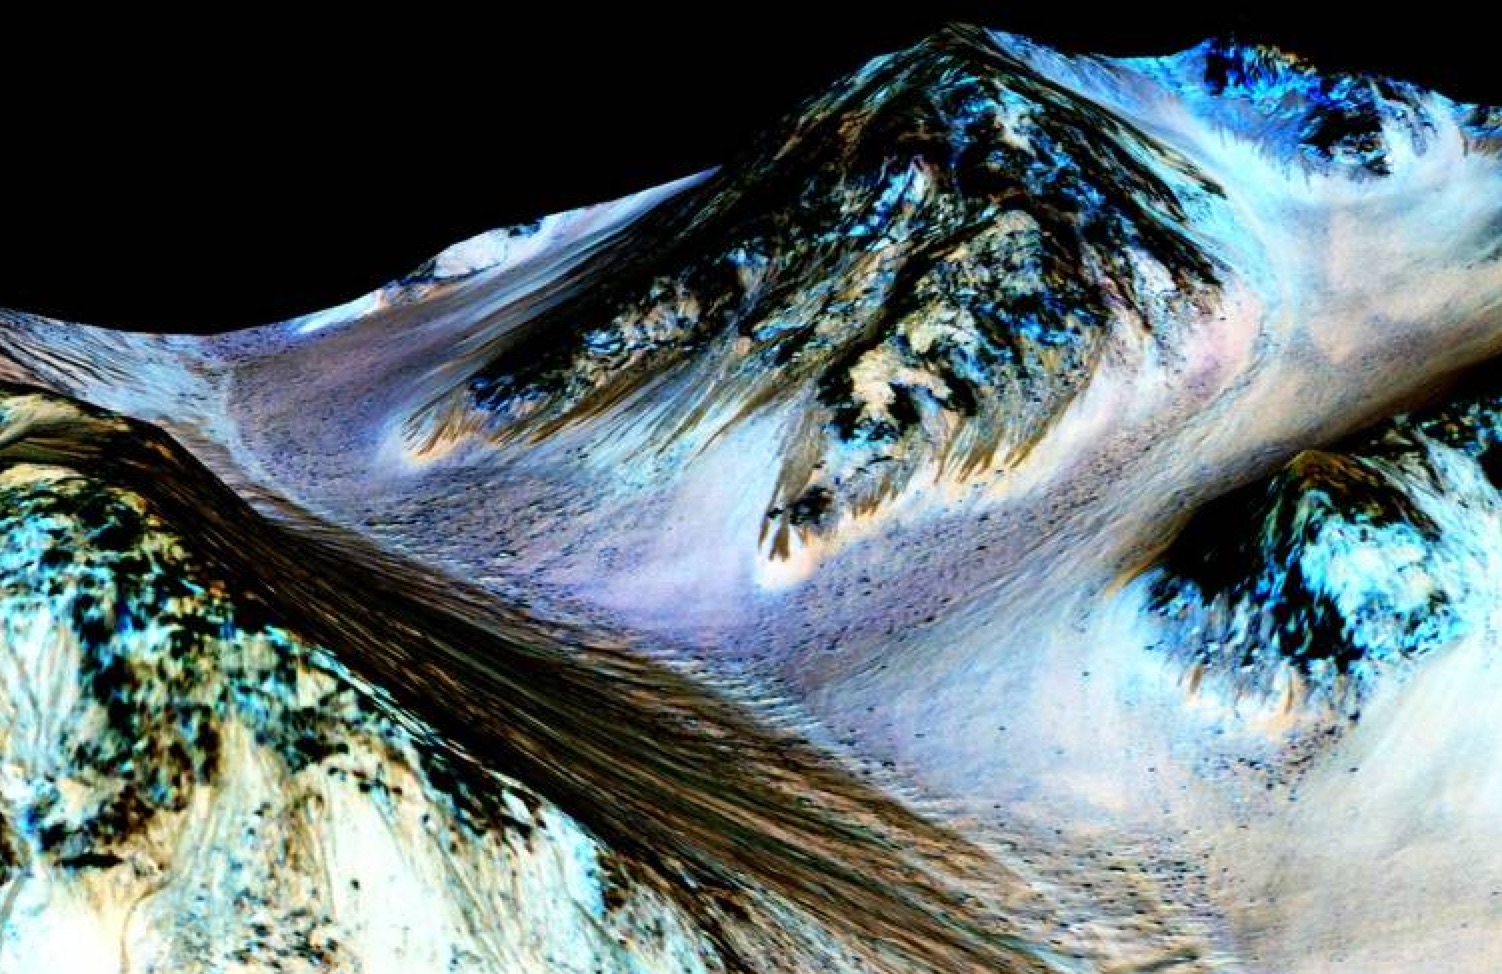 Mars, water streaks